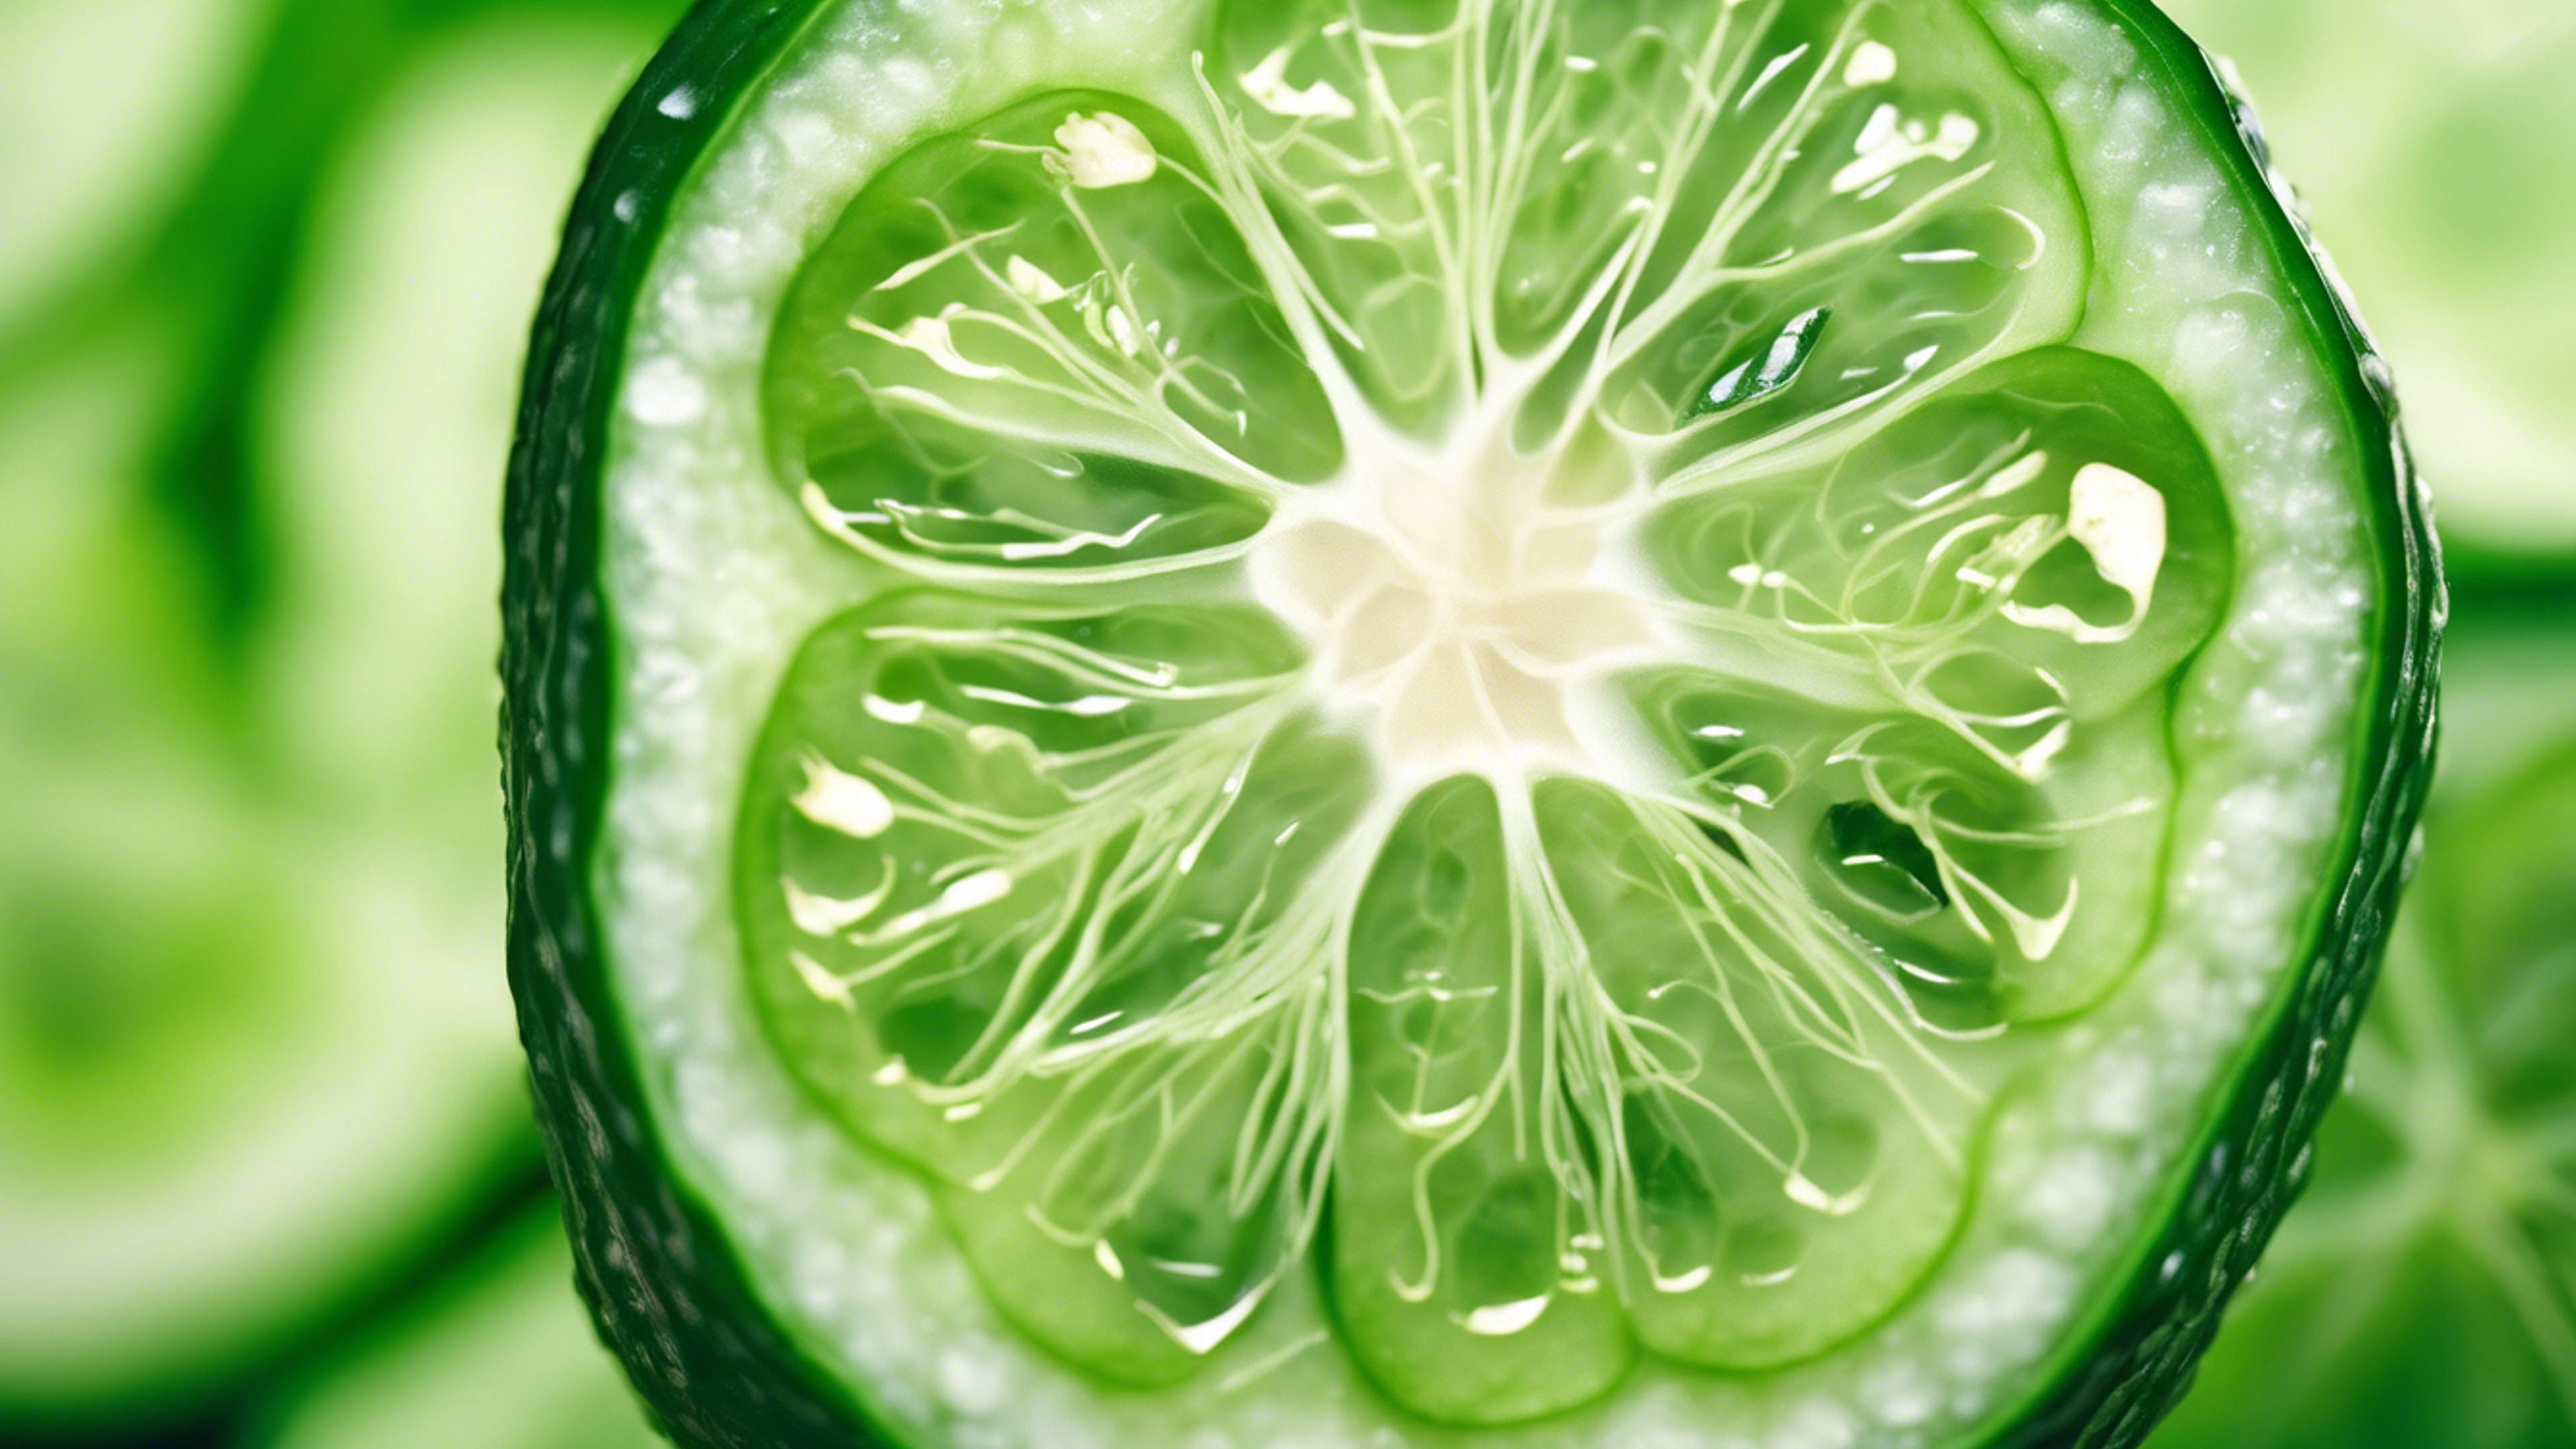 A closeup of a cucumber slice with cool green hues. Wallpaper[ac6b145182c6484fa5b7]